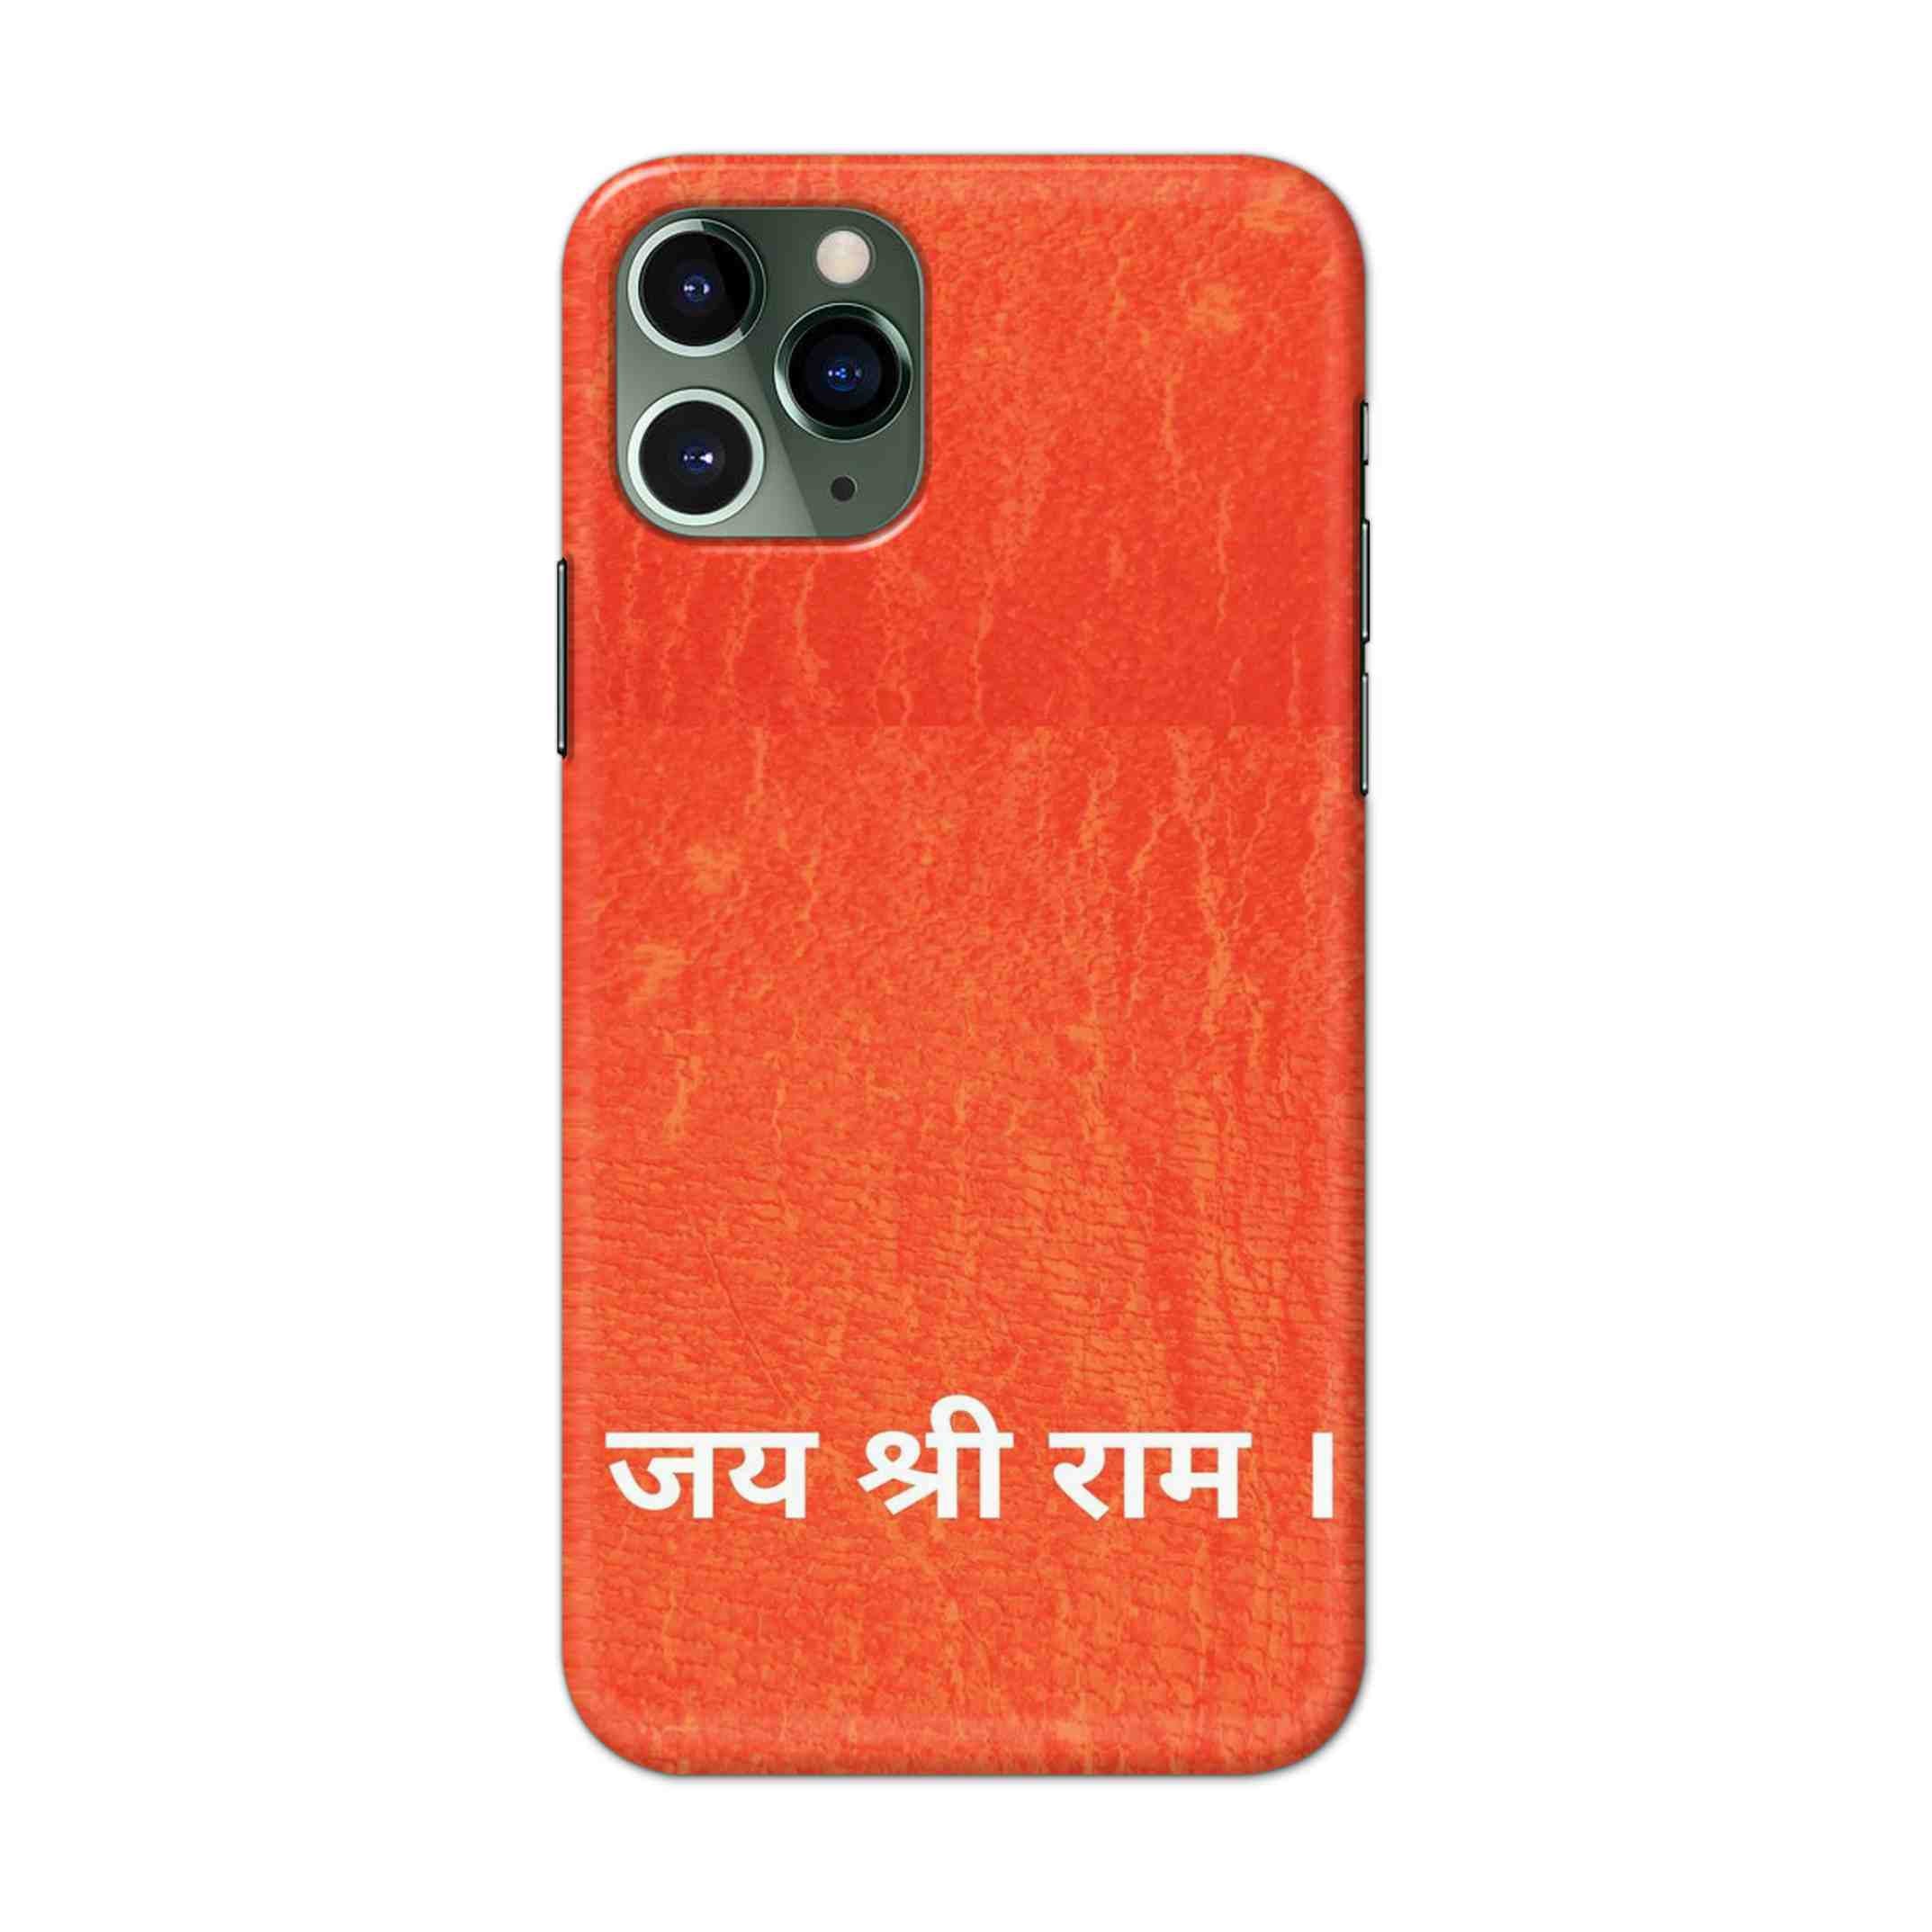 Buy Jai Shree Ram Hard Back Mobile Phone Case/Cover For iPhone 11 Pro Online